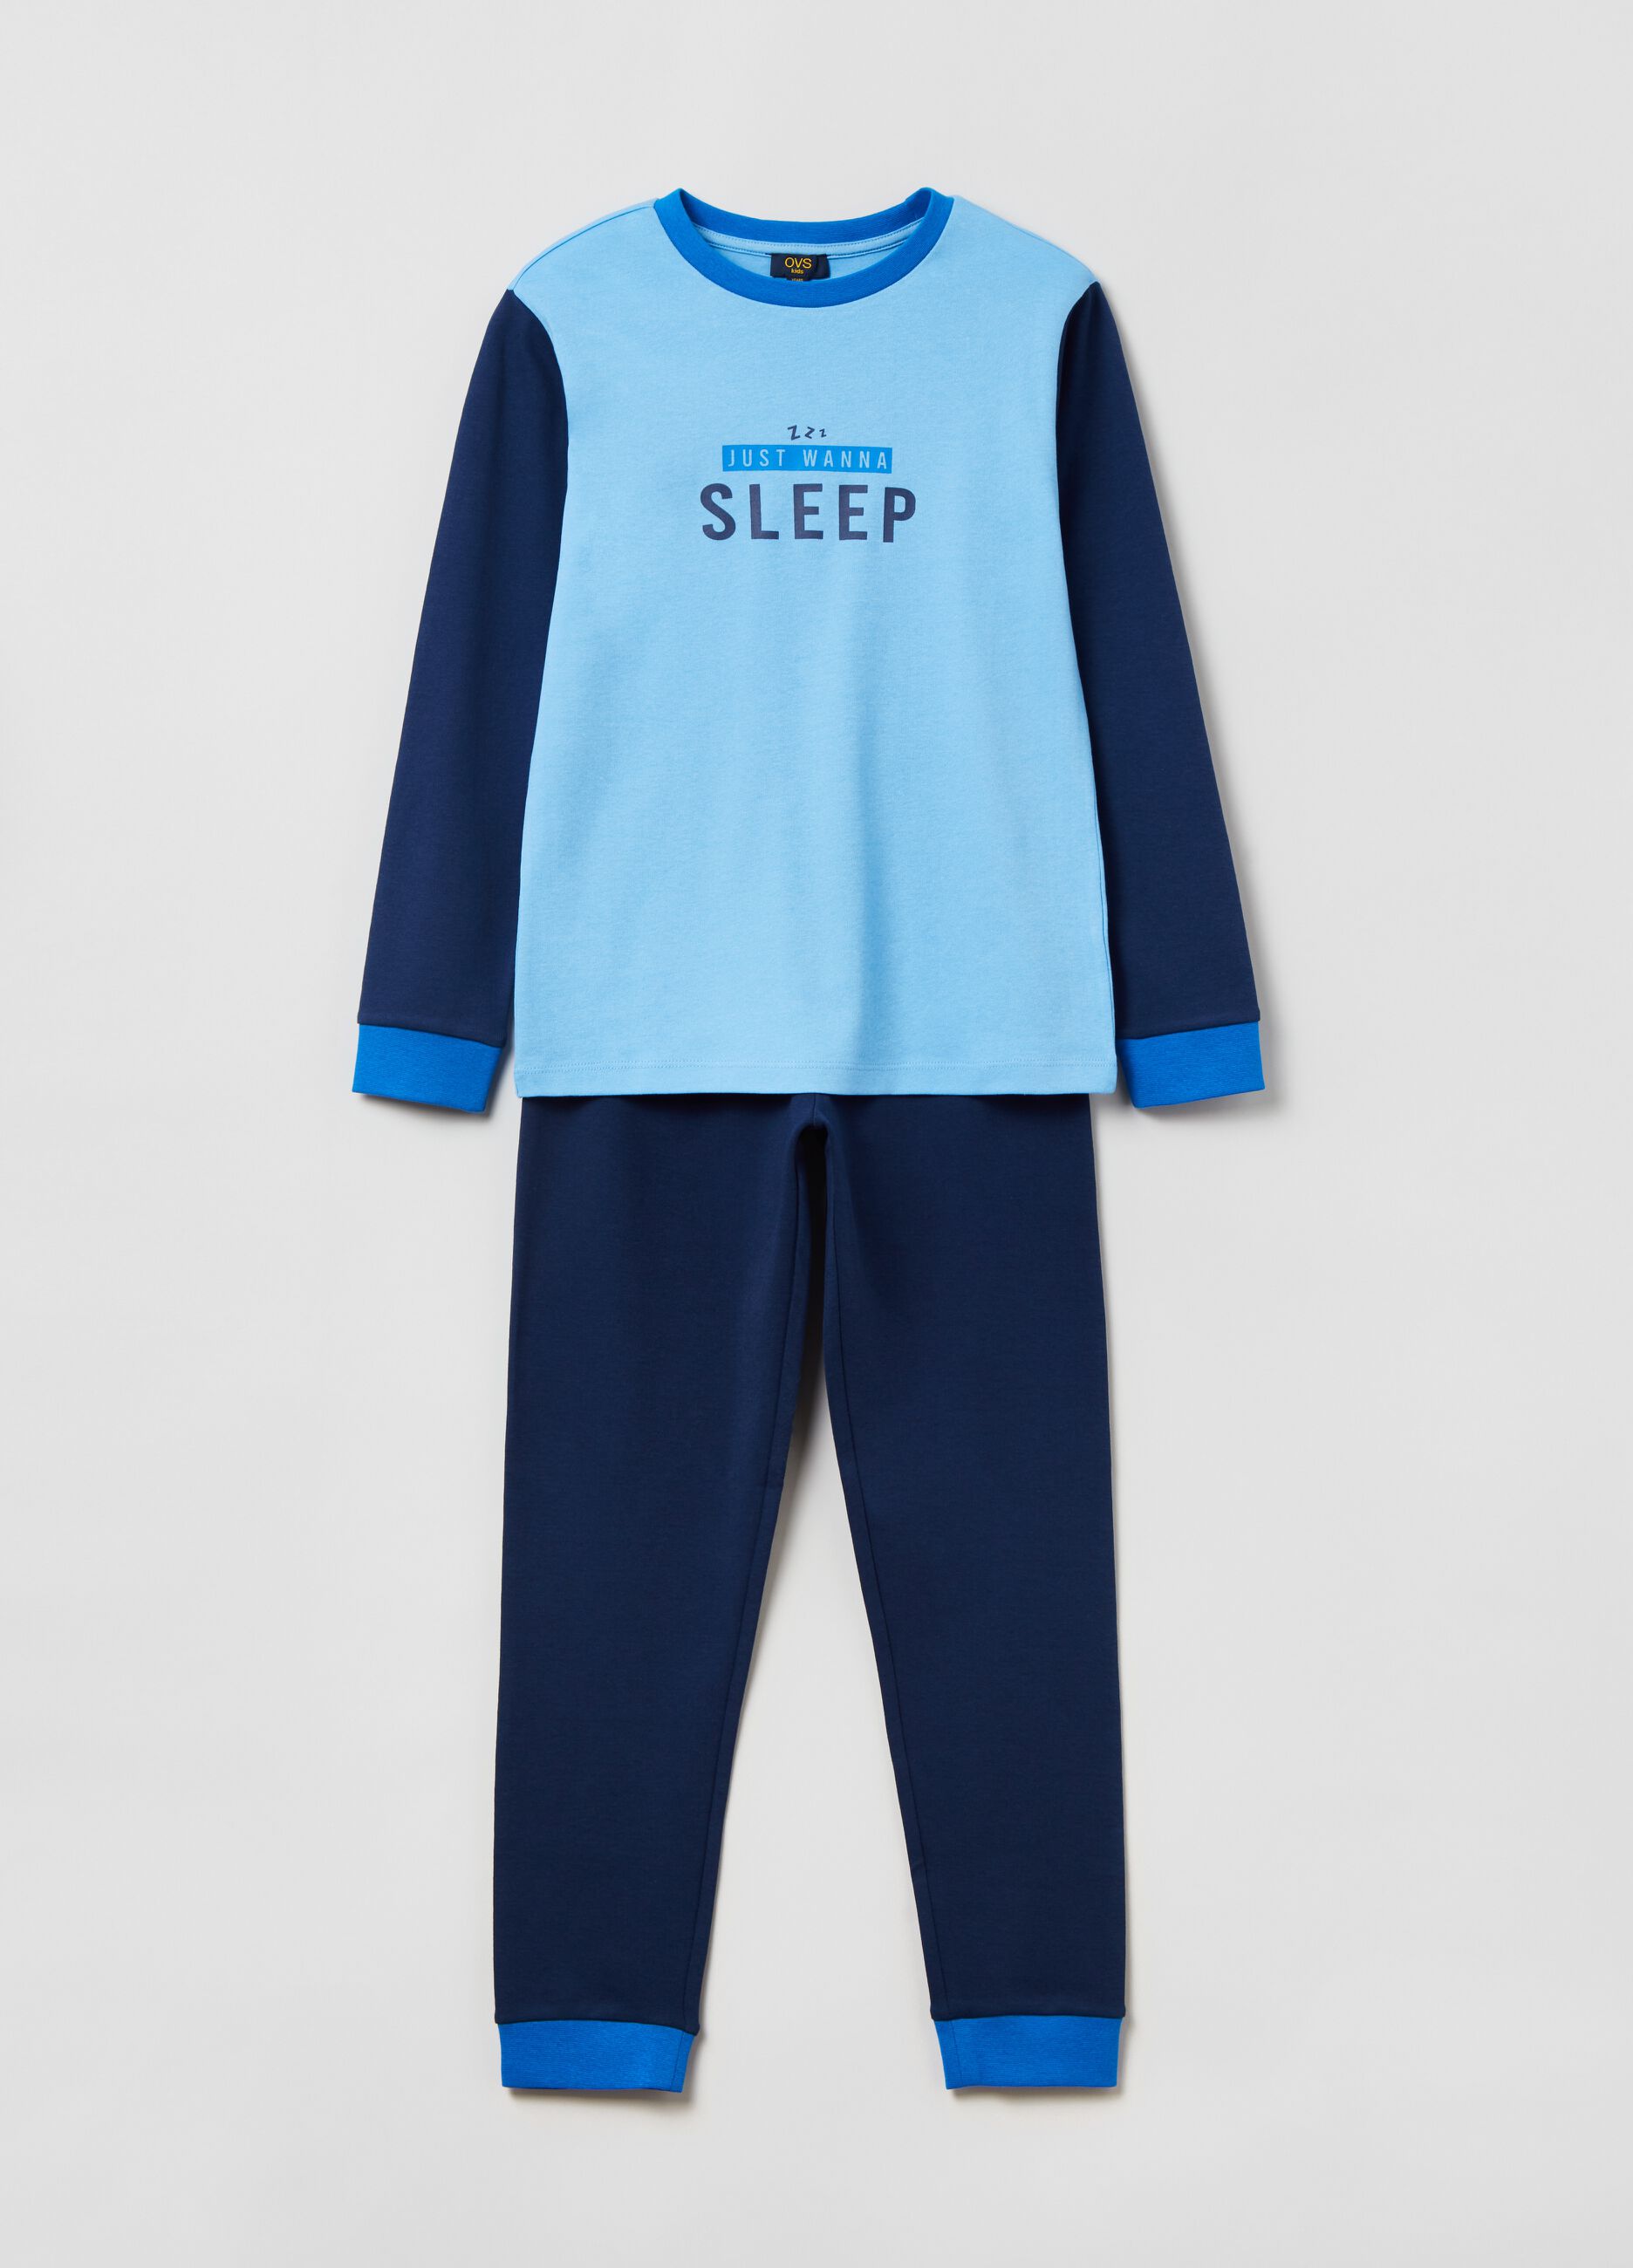 Pijama largo de algodón estampado motivo de texto